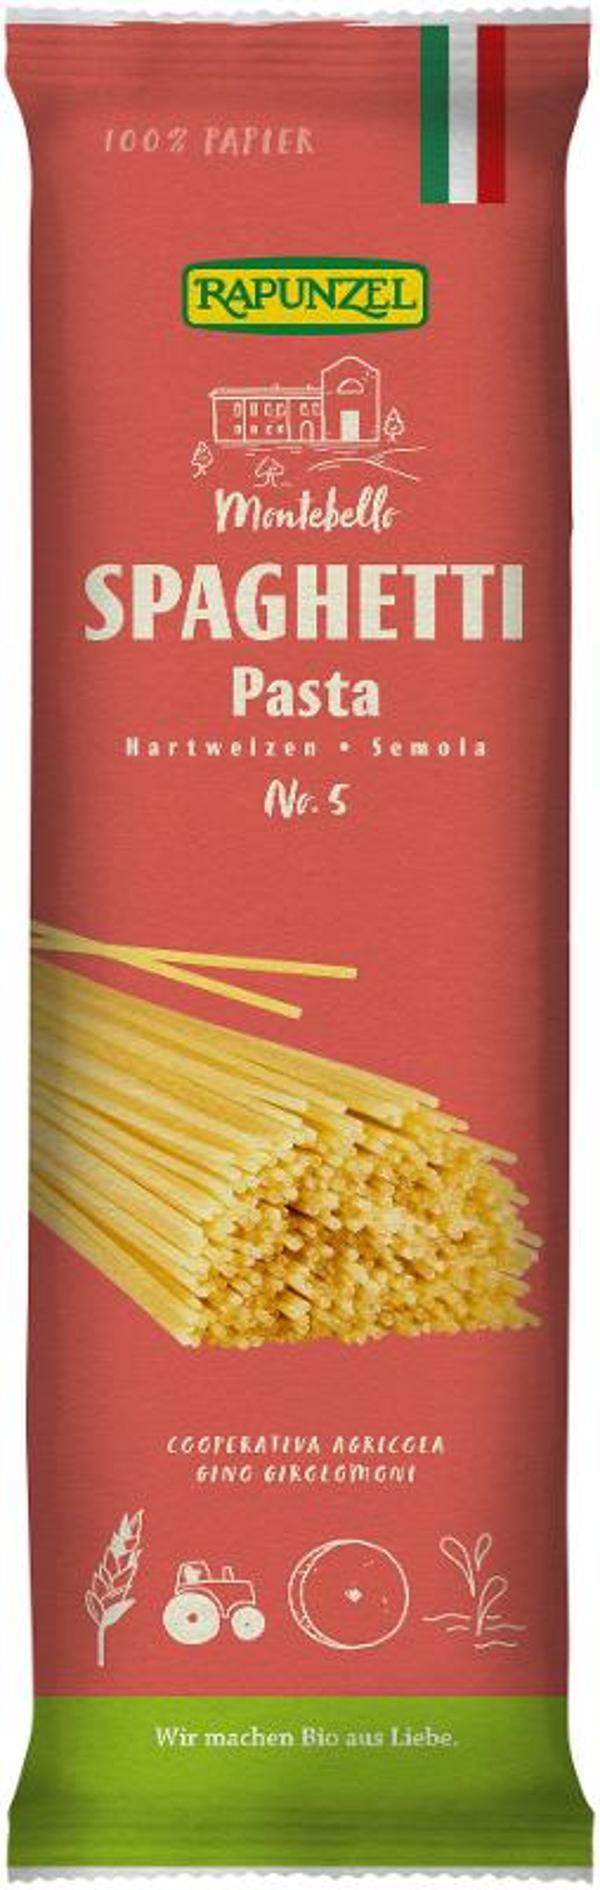 Produktfoto zu Rapunzel Spaghetti - 500g